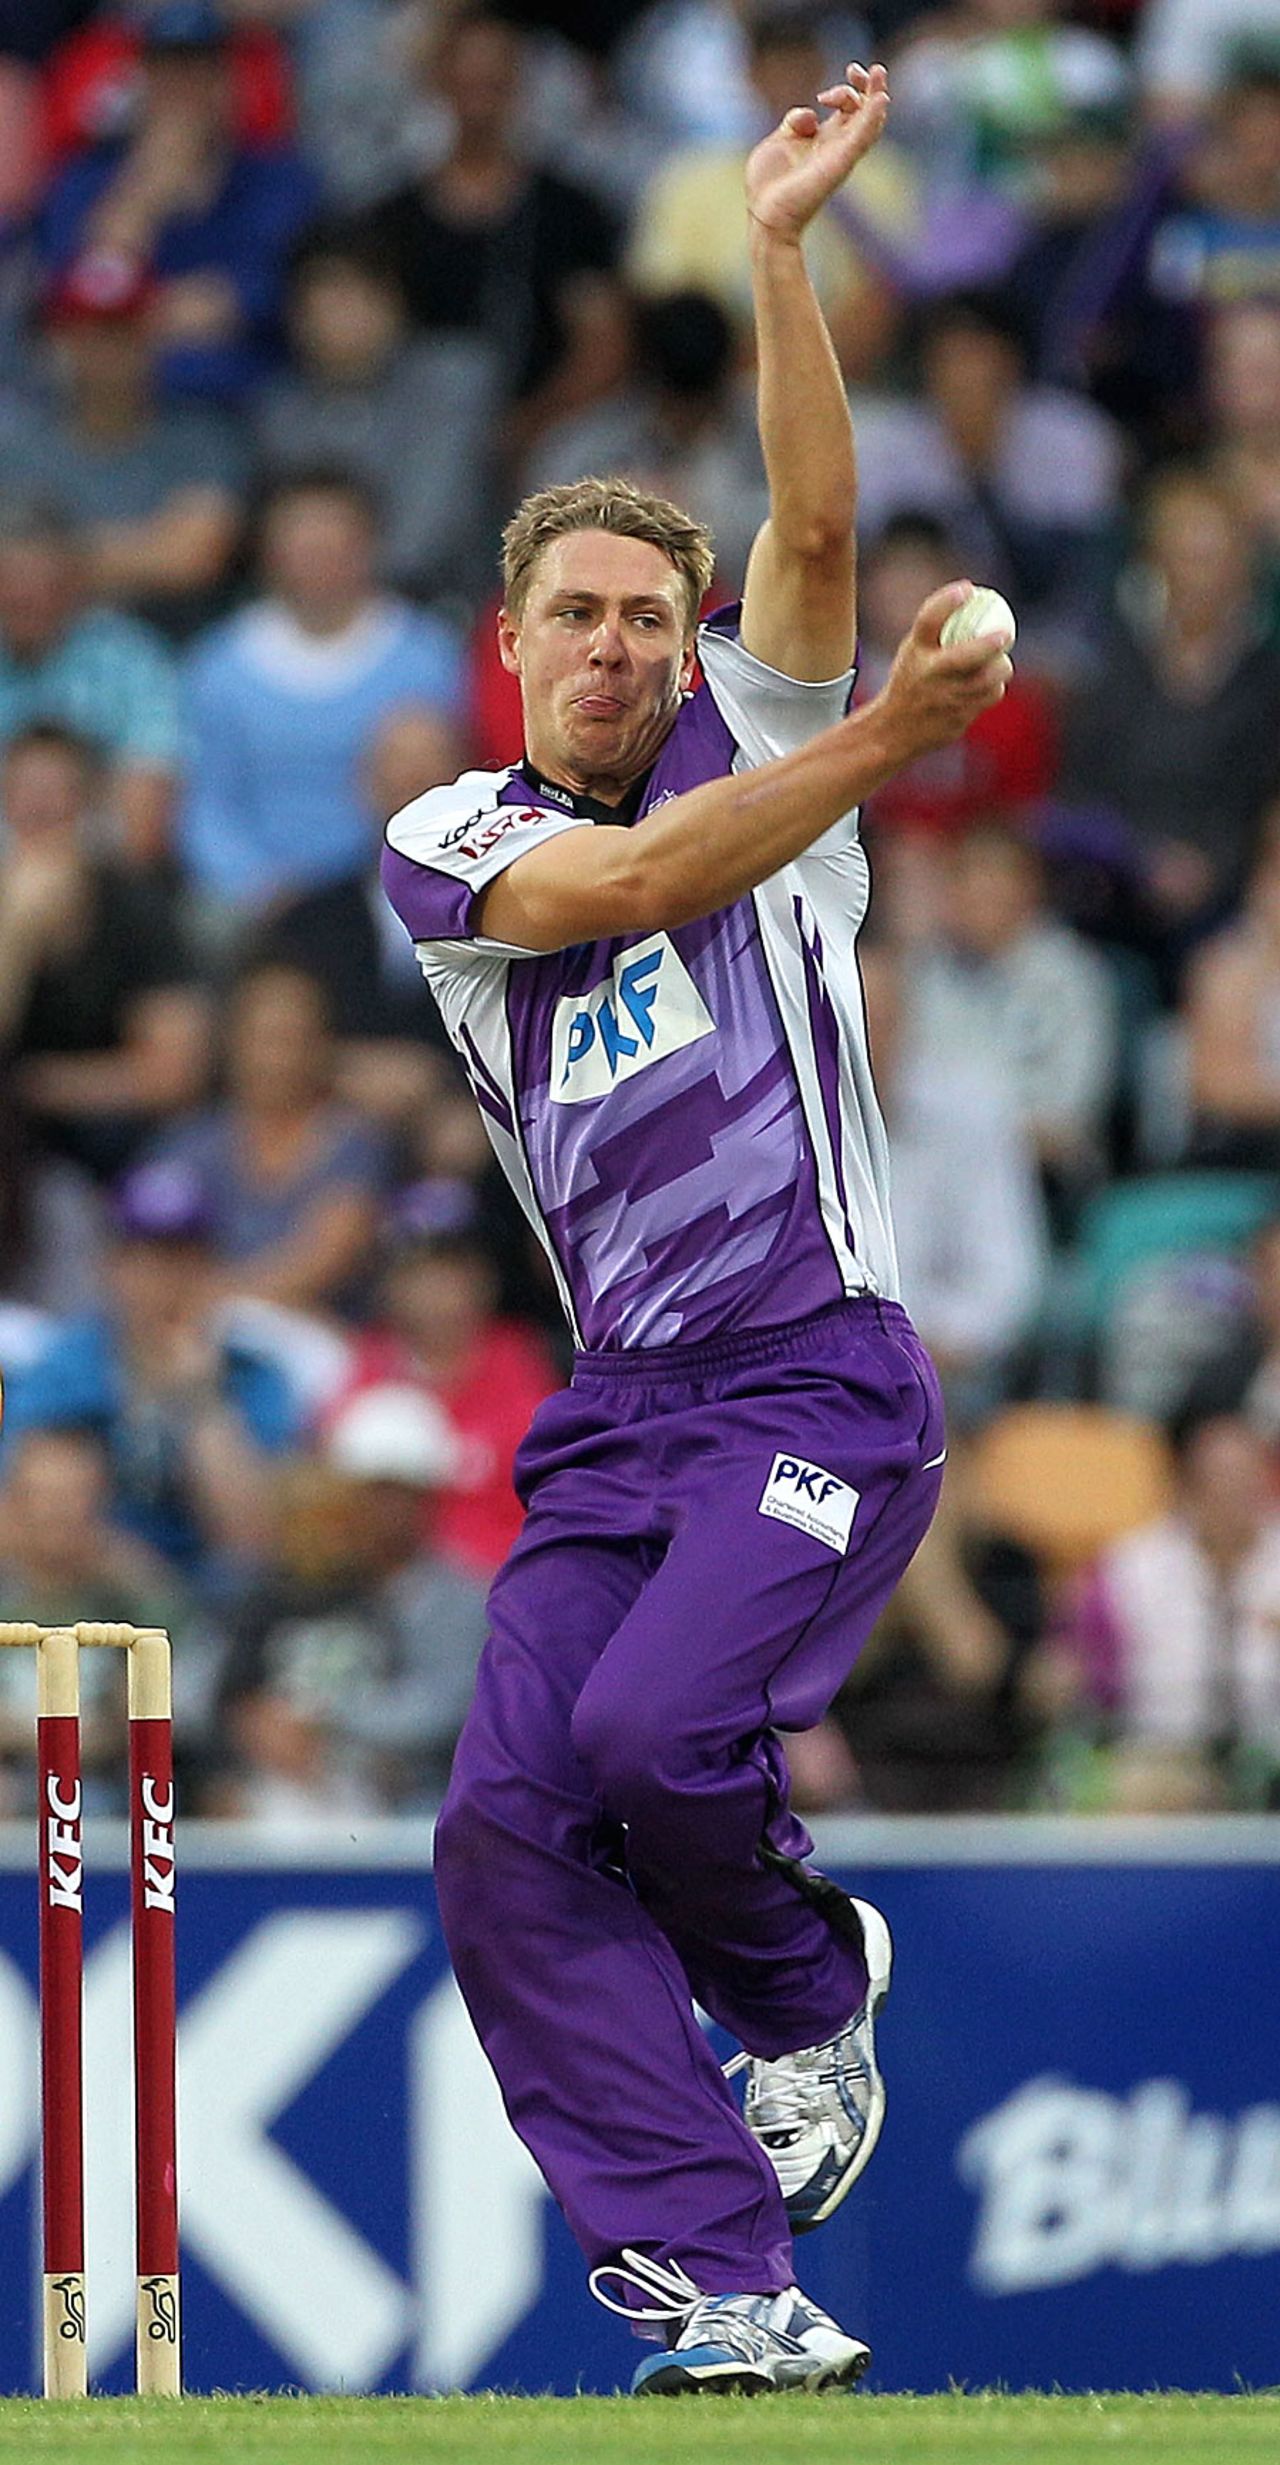 Matt Johnston bowls with a wrong-footed action, Hobart Hurricanes v Sydney Thunder, BBL, Hobart, January 1, 2012